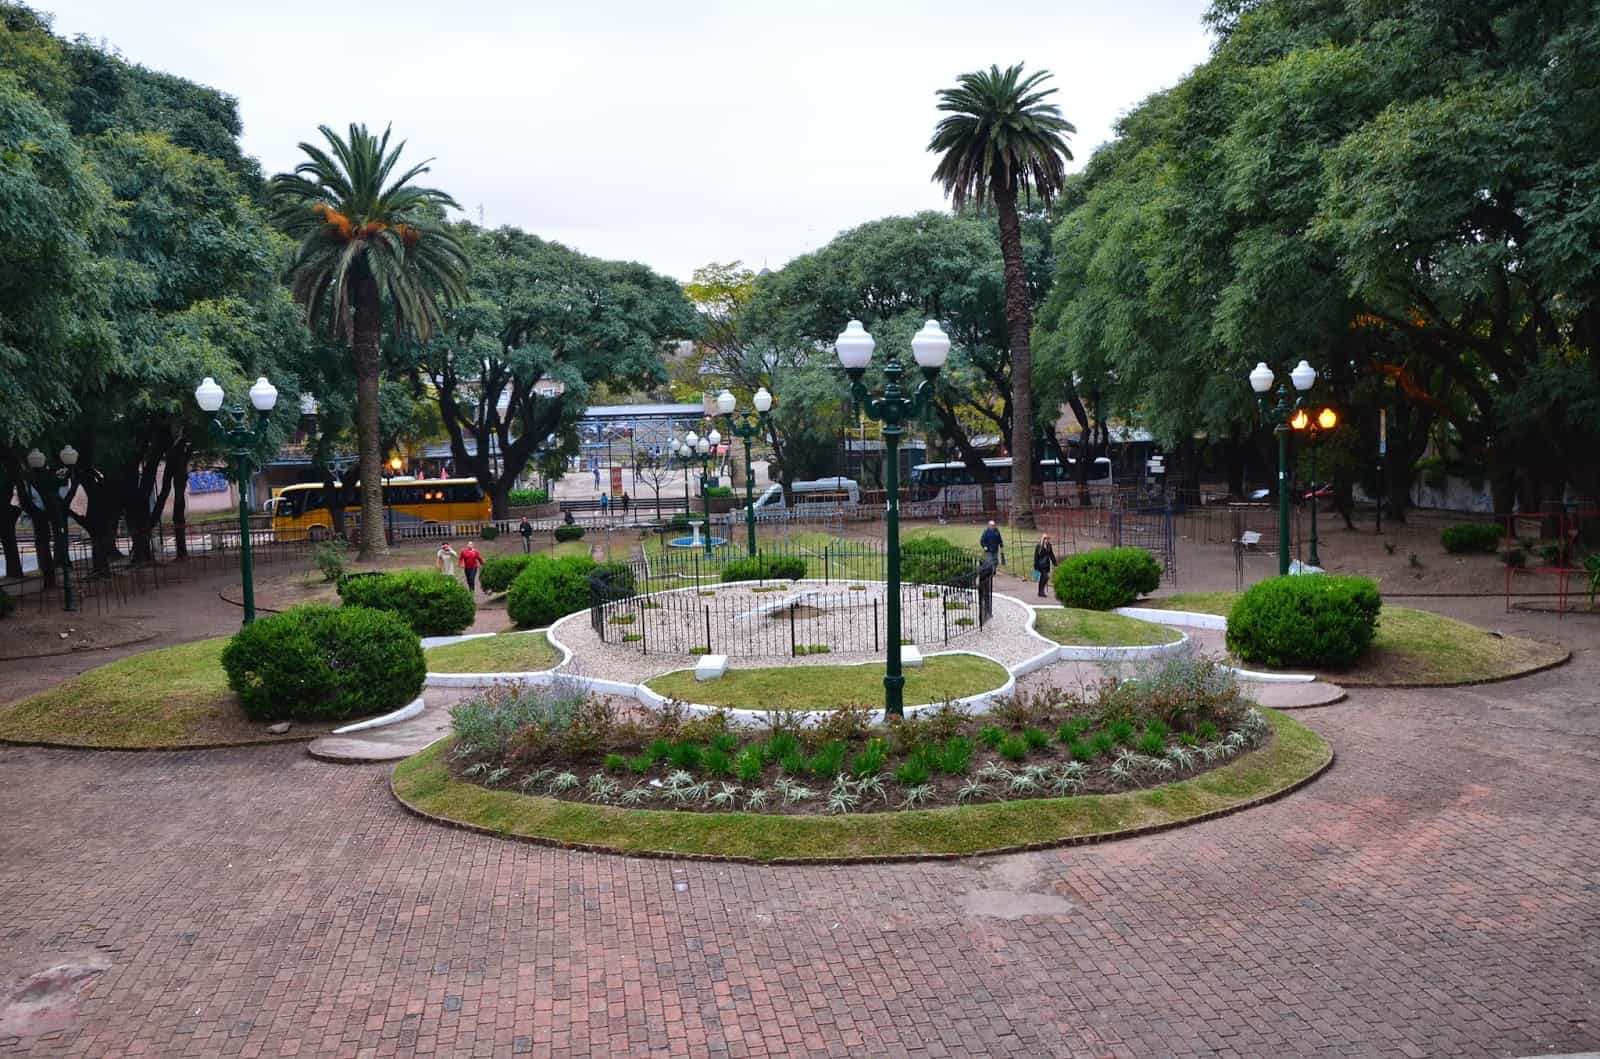 Plaza Mitre in San Isidro, Argentina